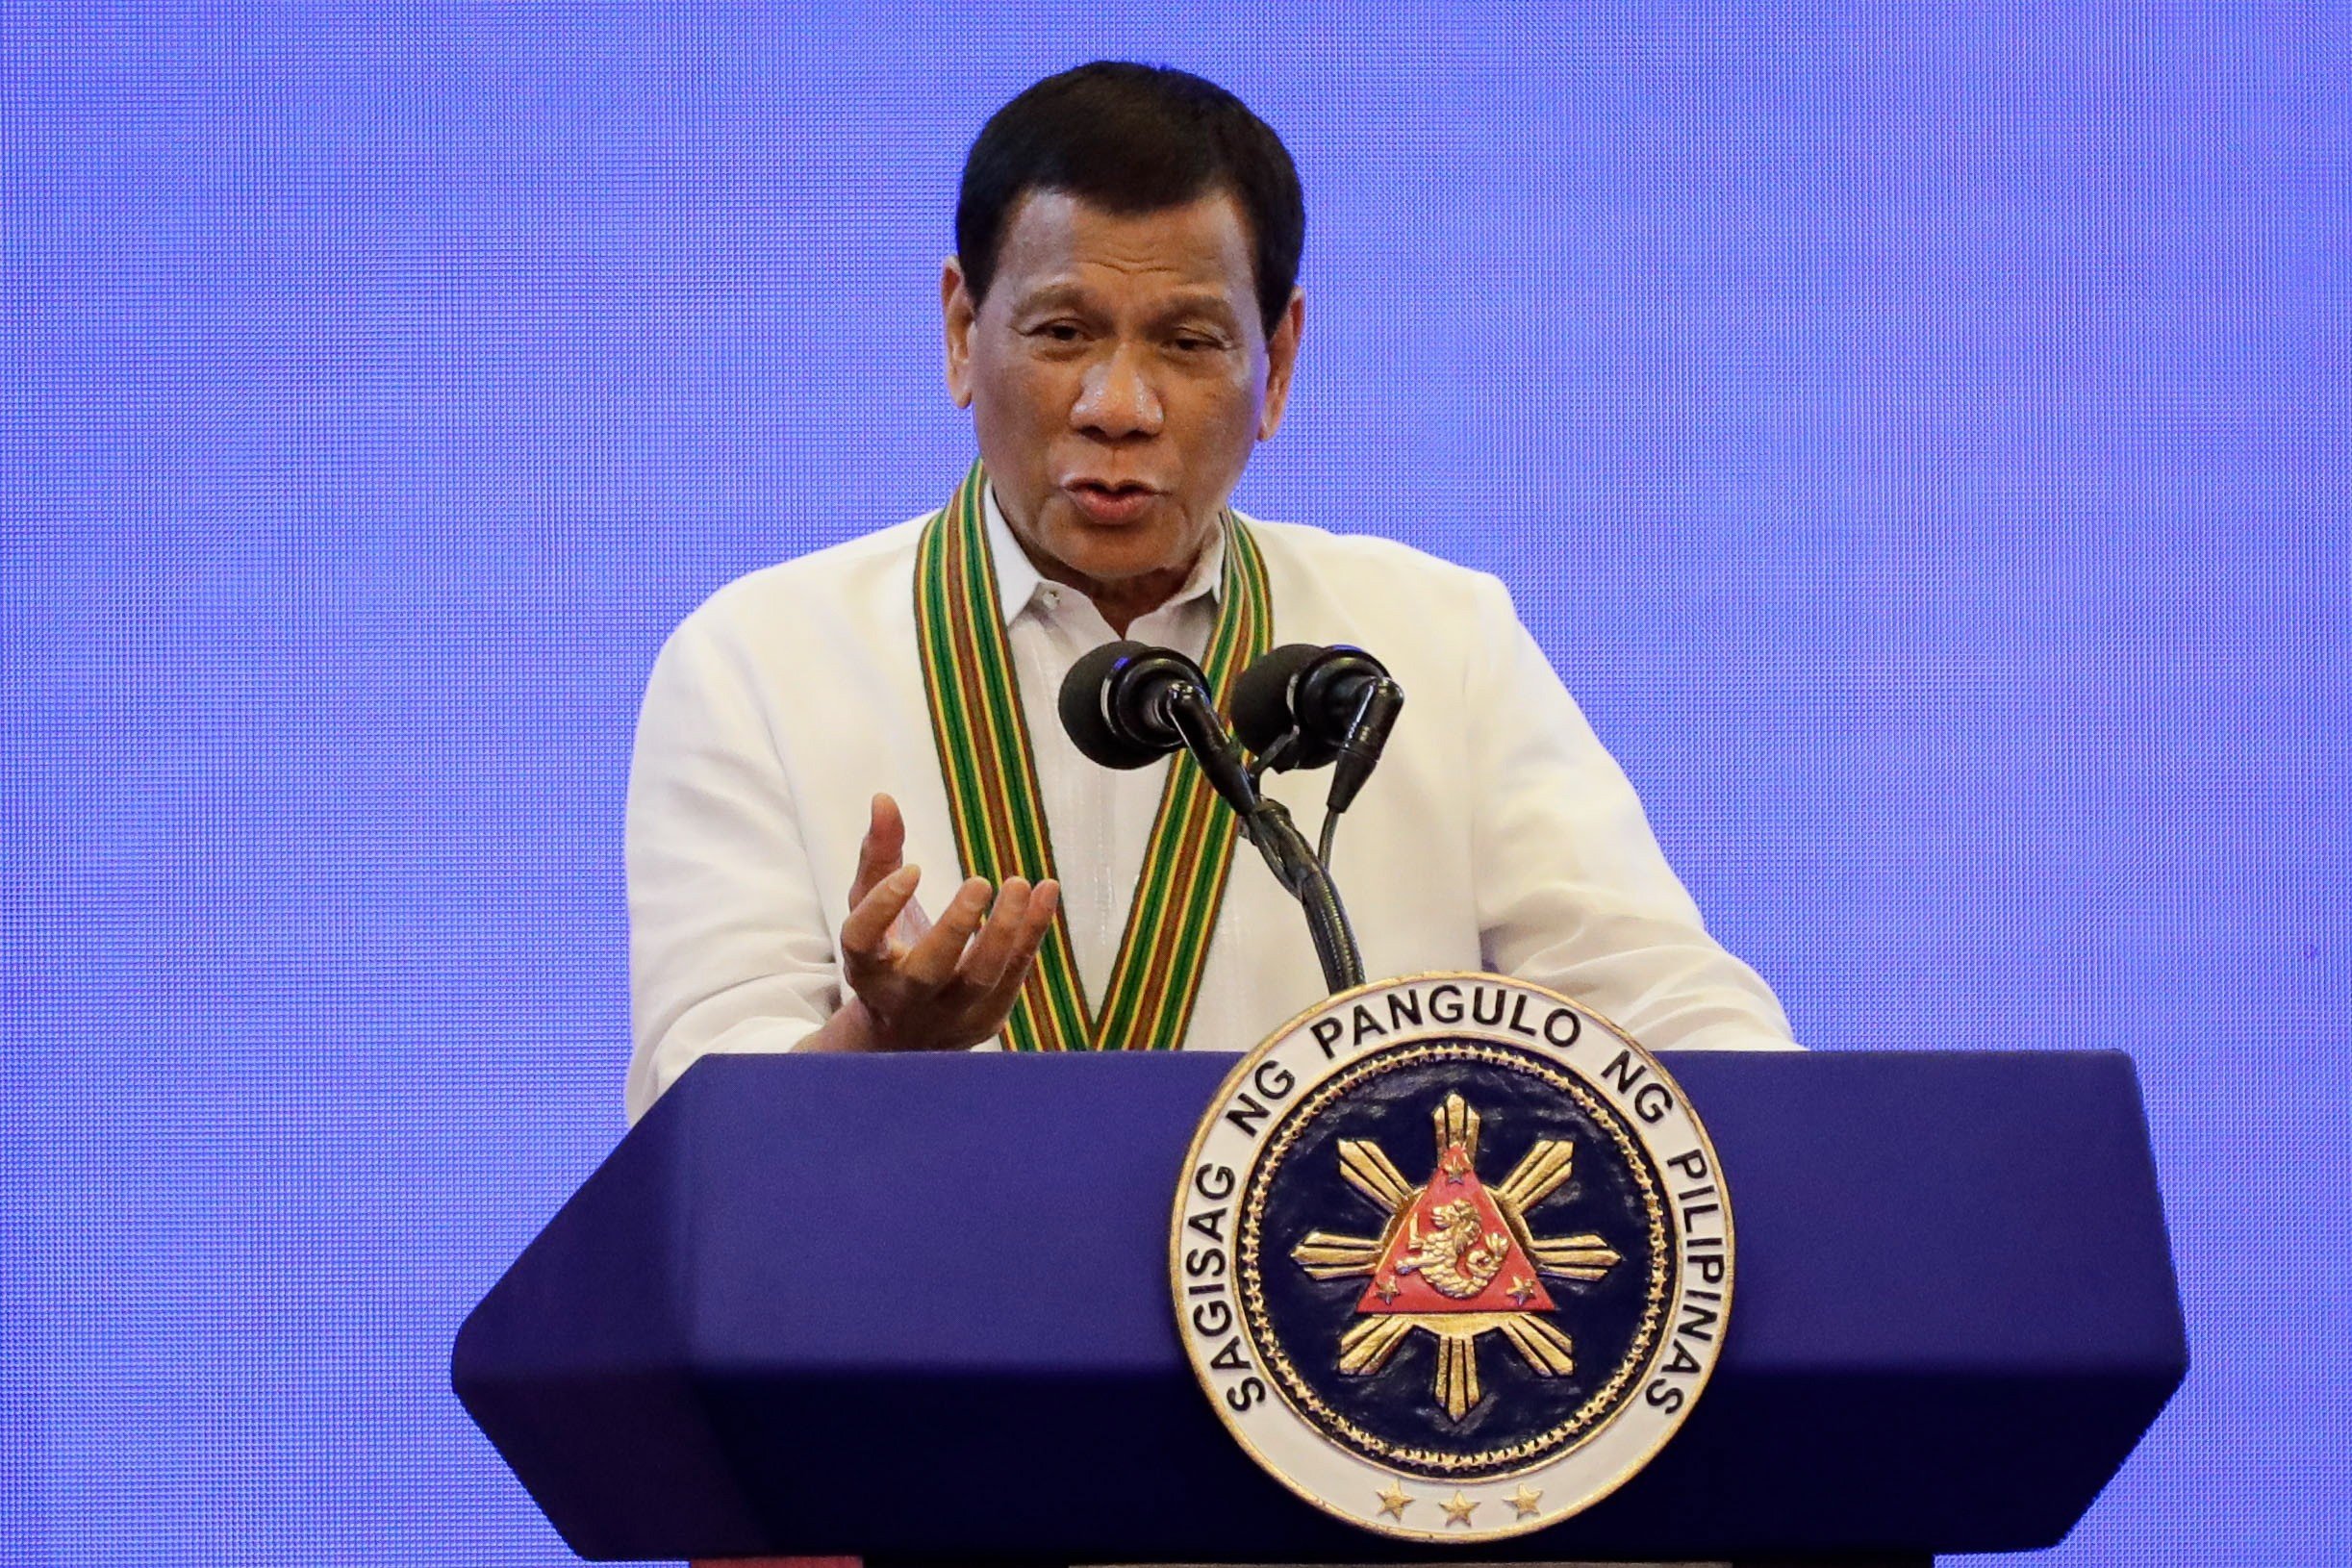 President Rodrigo Duterte has suggested the Philippines change its name to Maharlika. Photo: EPA-EFE